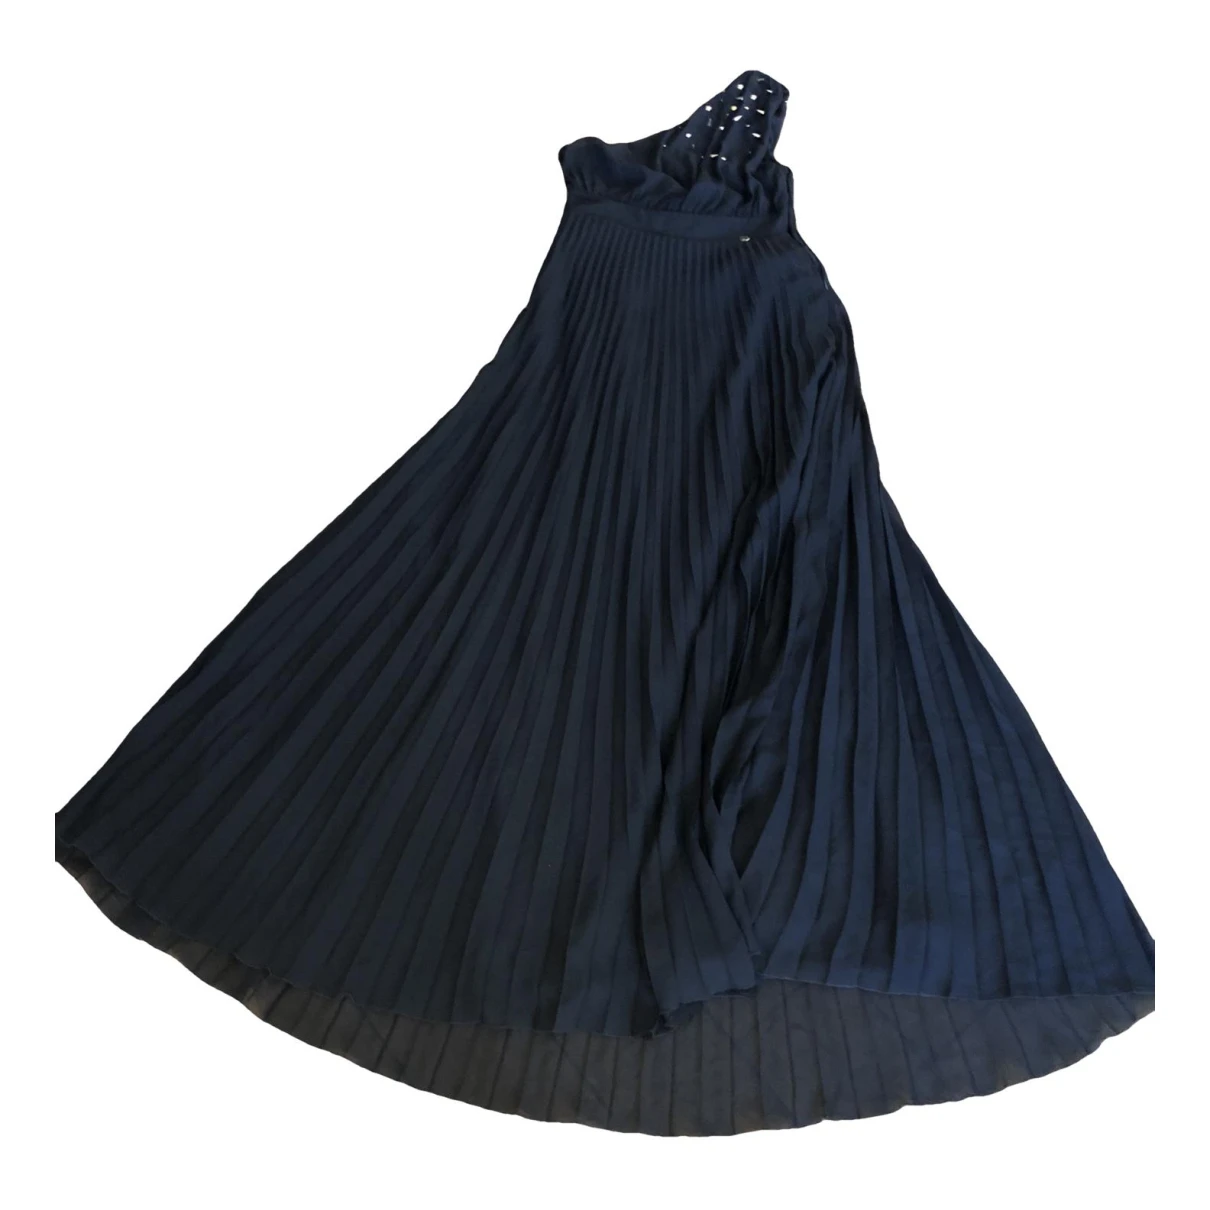 Pre-owned Mangano Maxi Dress In Black